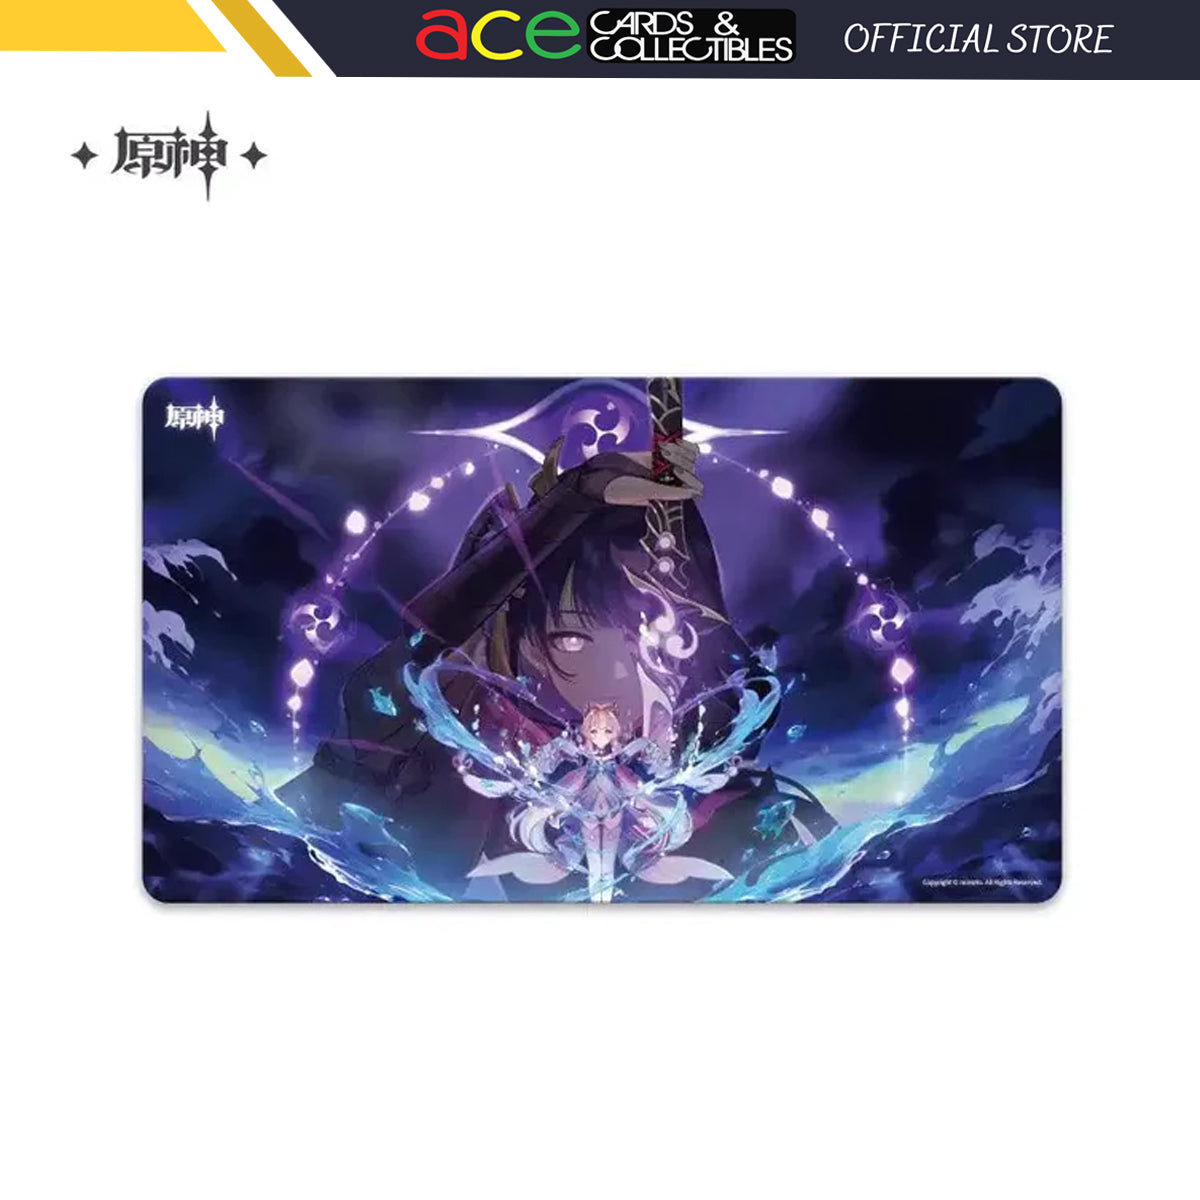 miHoYo -Genshin Impact- Raiden Shogun/Kokomi Passage of Clouds and Stars Theme Mousepad-miHoYo-Ace Cards & Collectibles